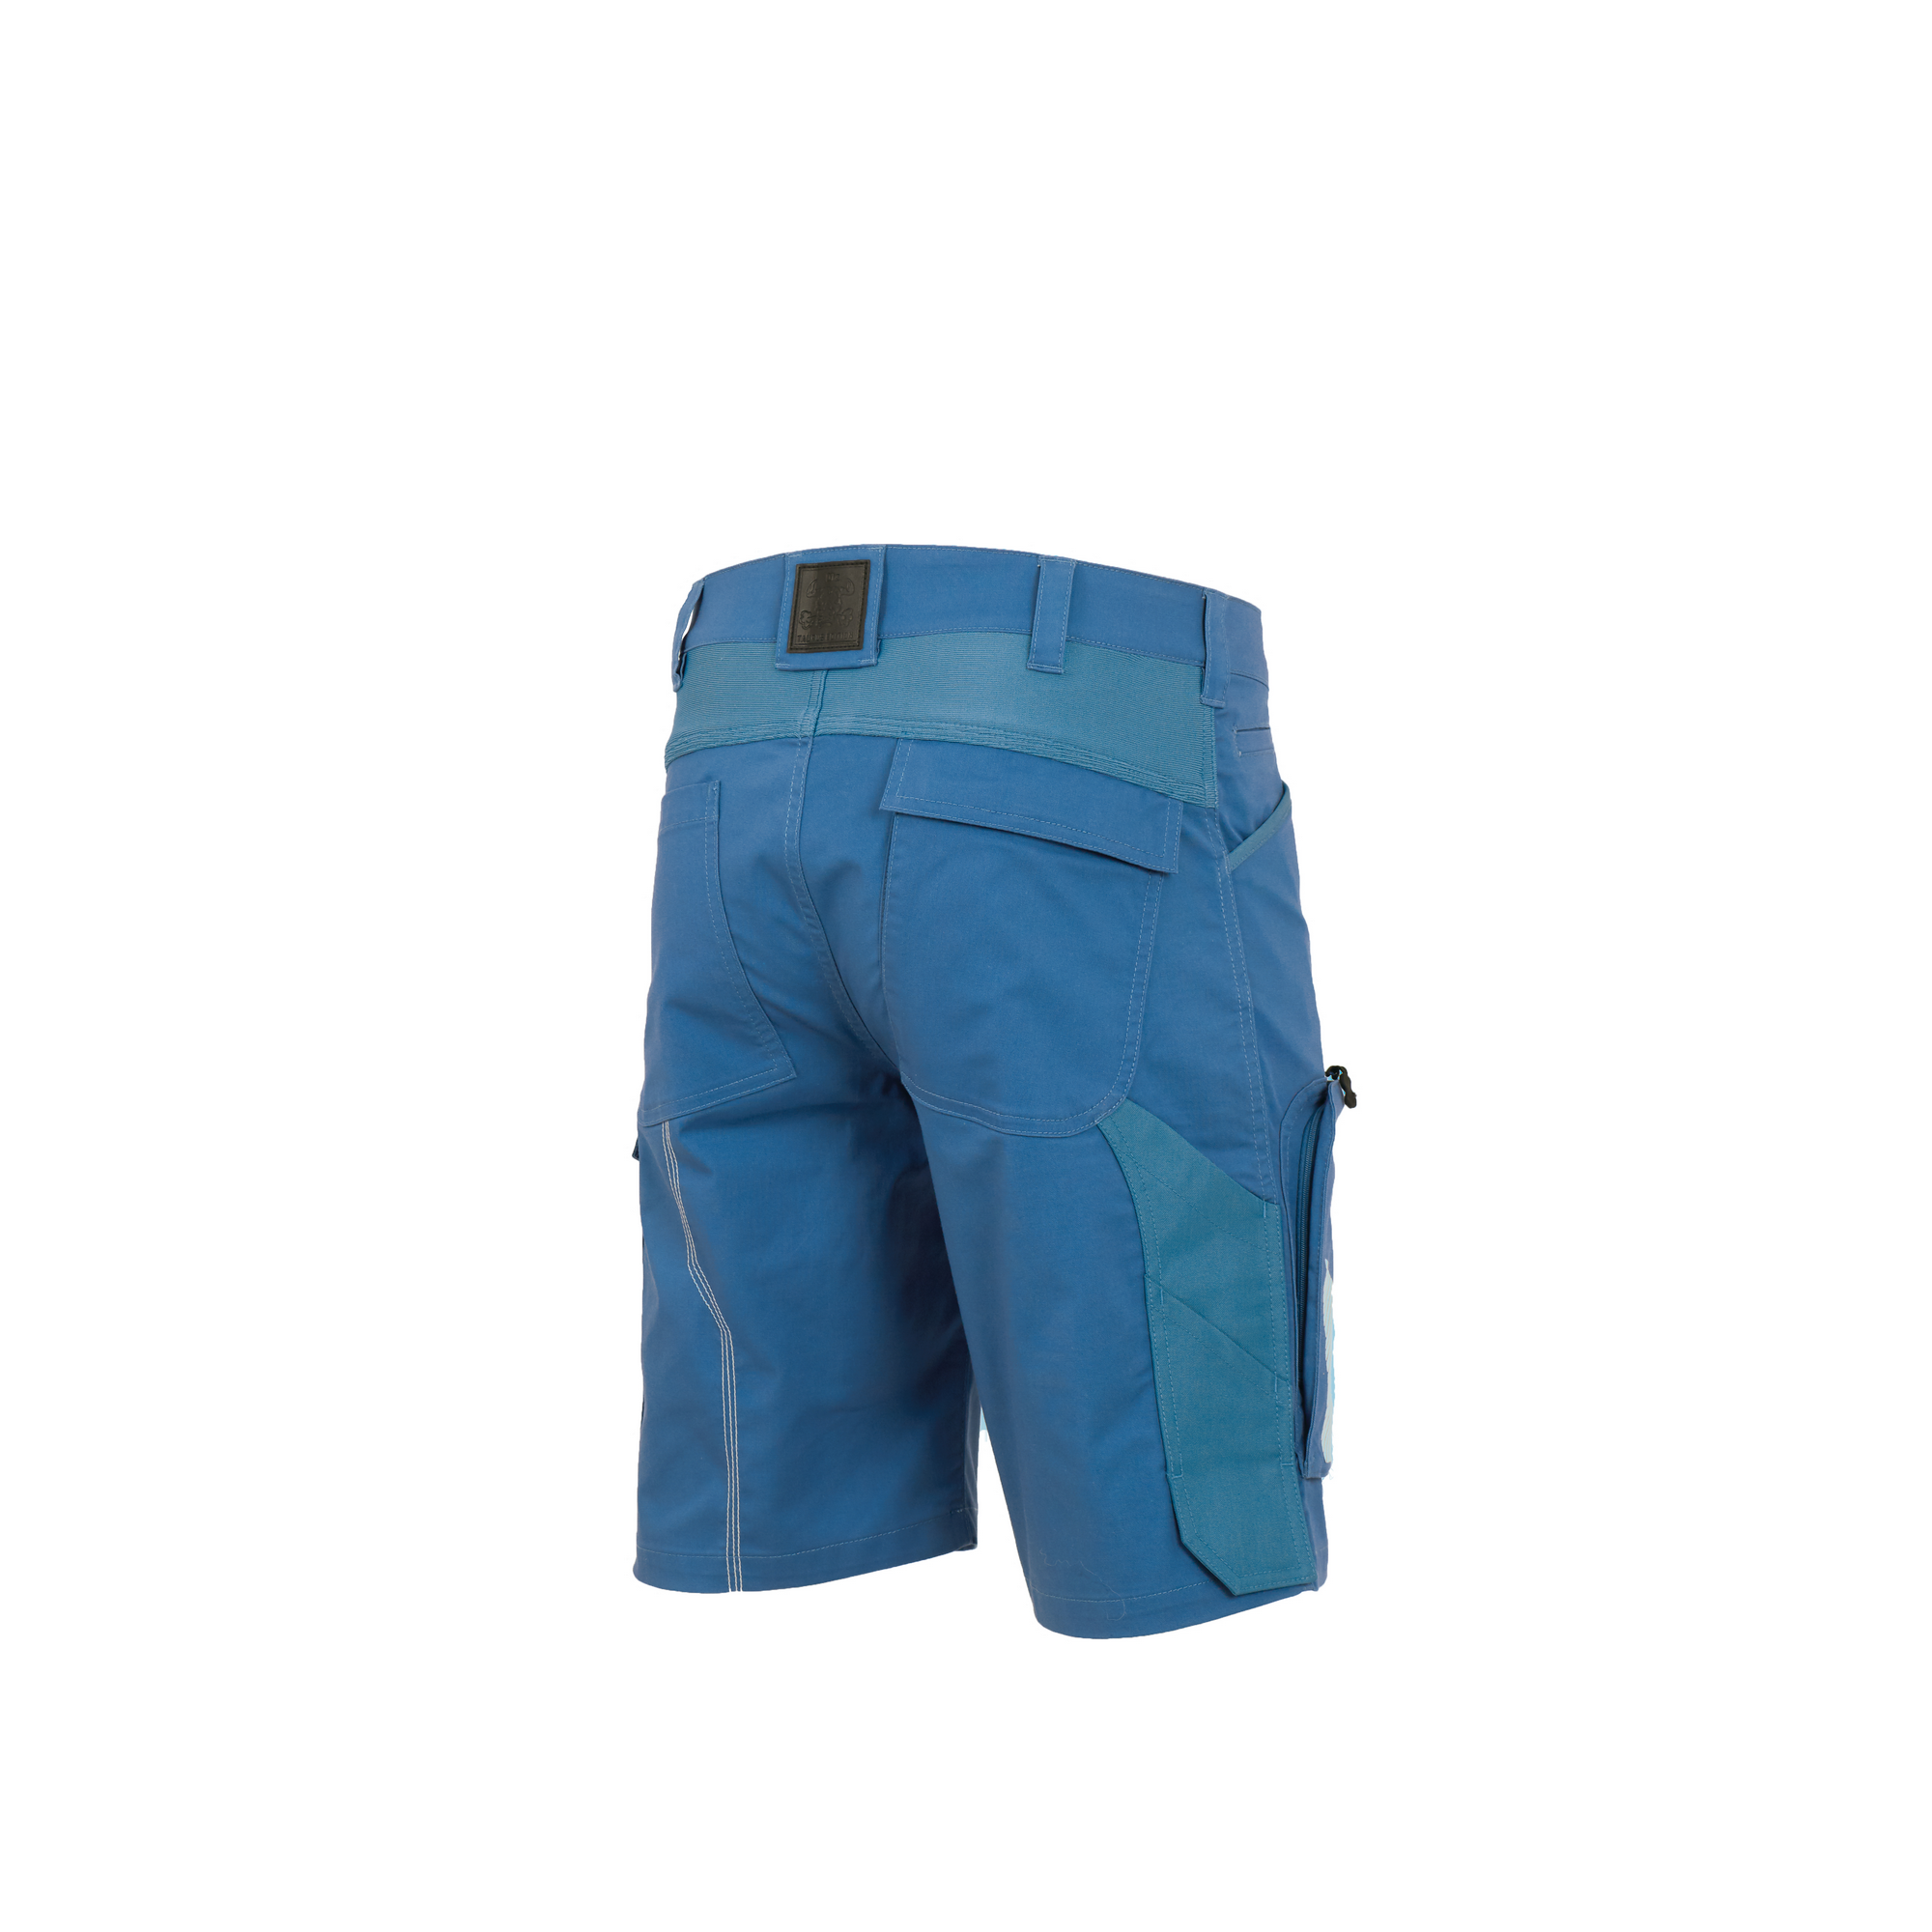 Shorts 'Taurus' blau 48 + product picture